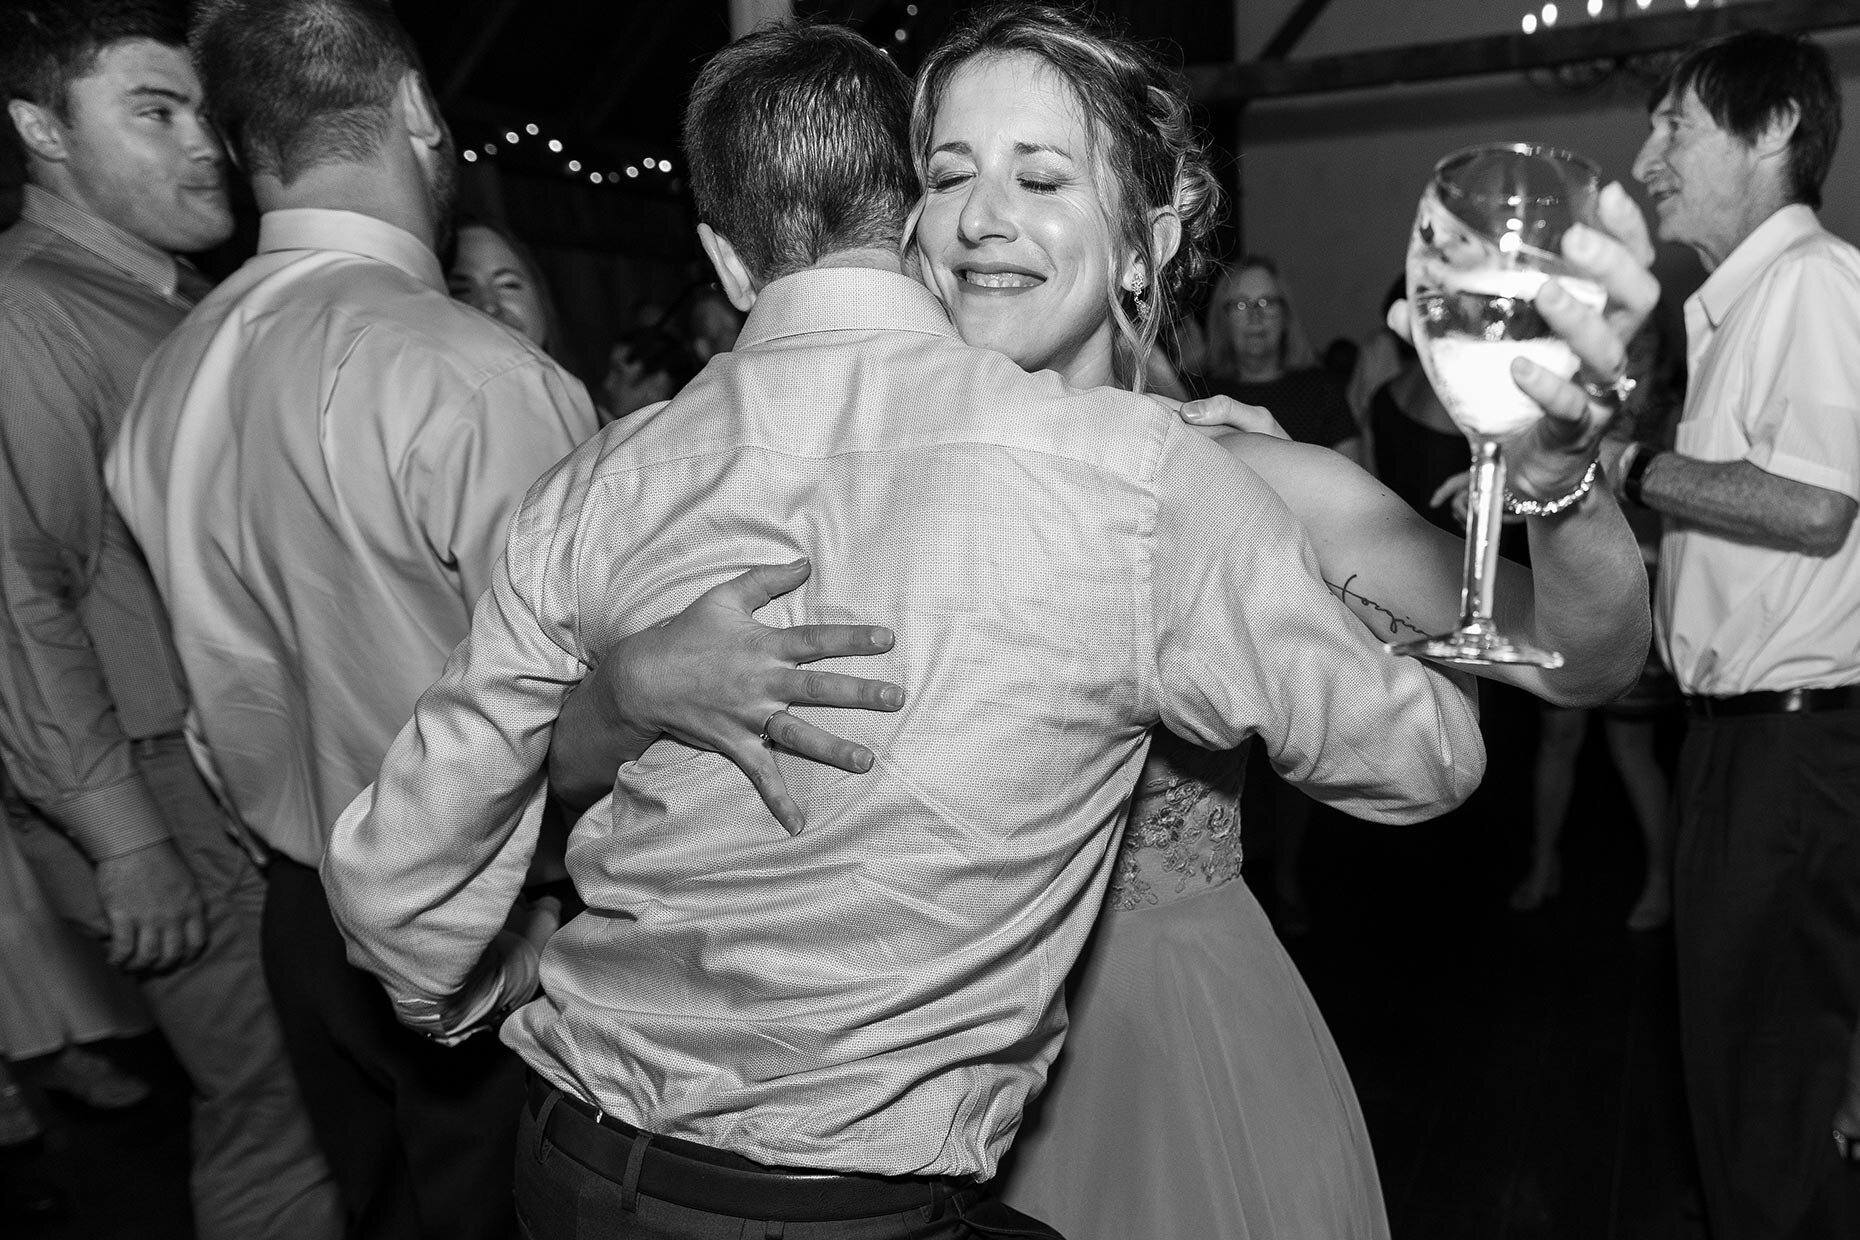 Bridesmaid dances with wine at reception, hugging